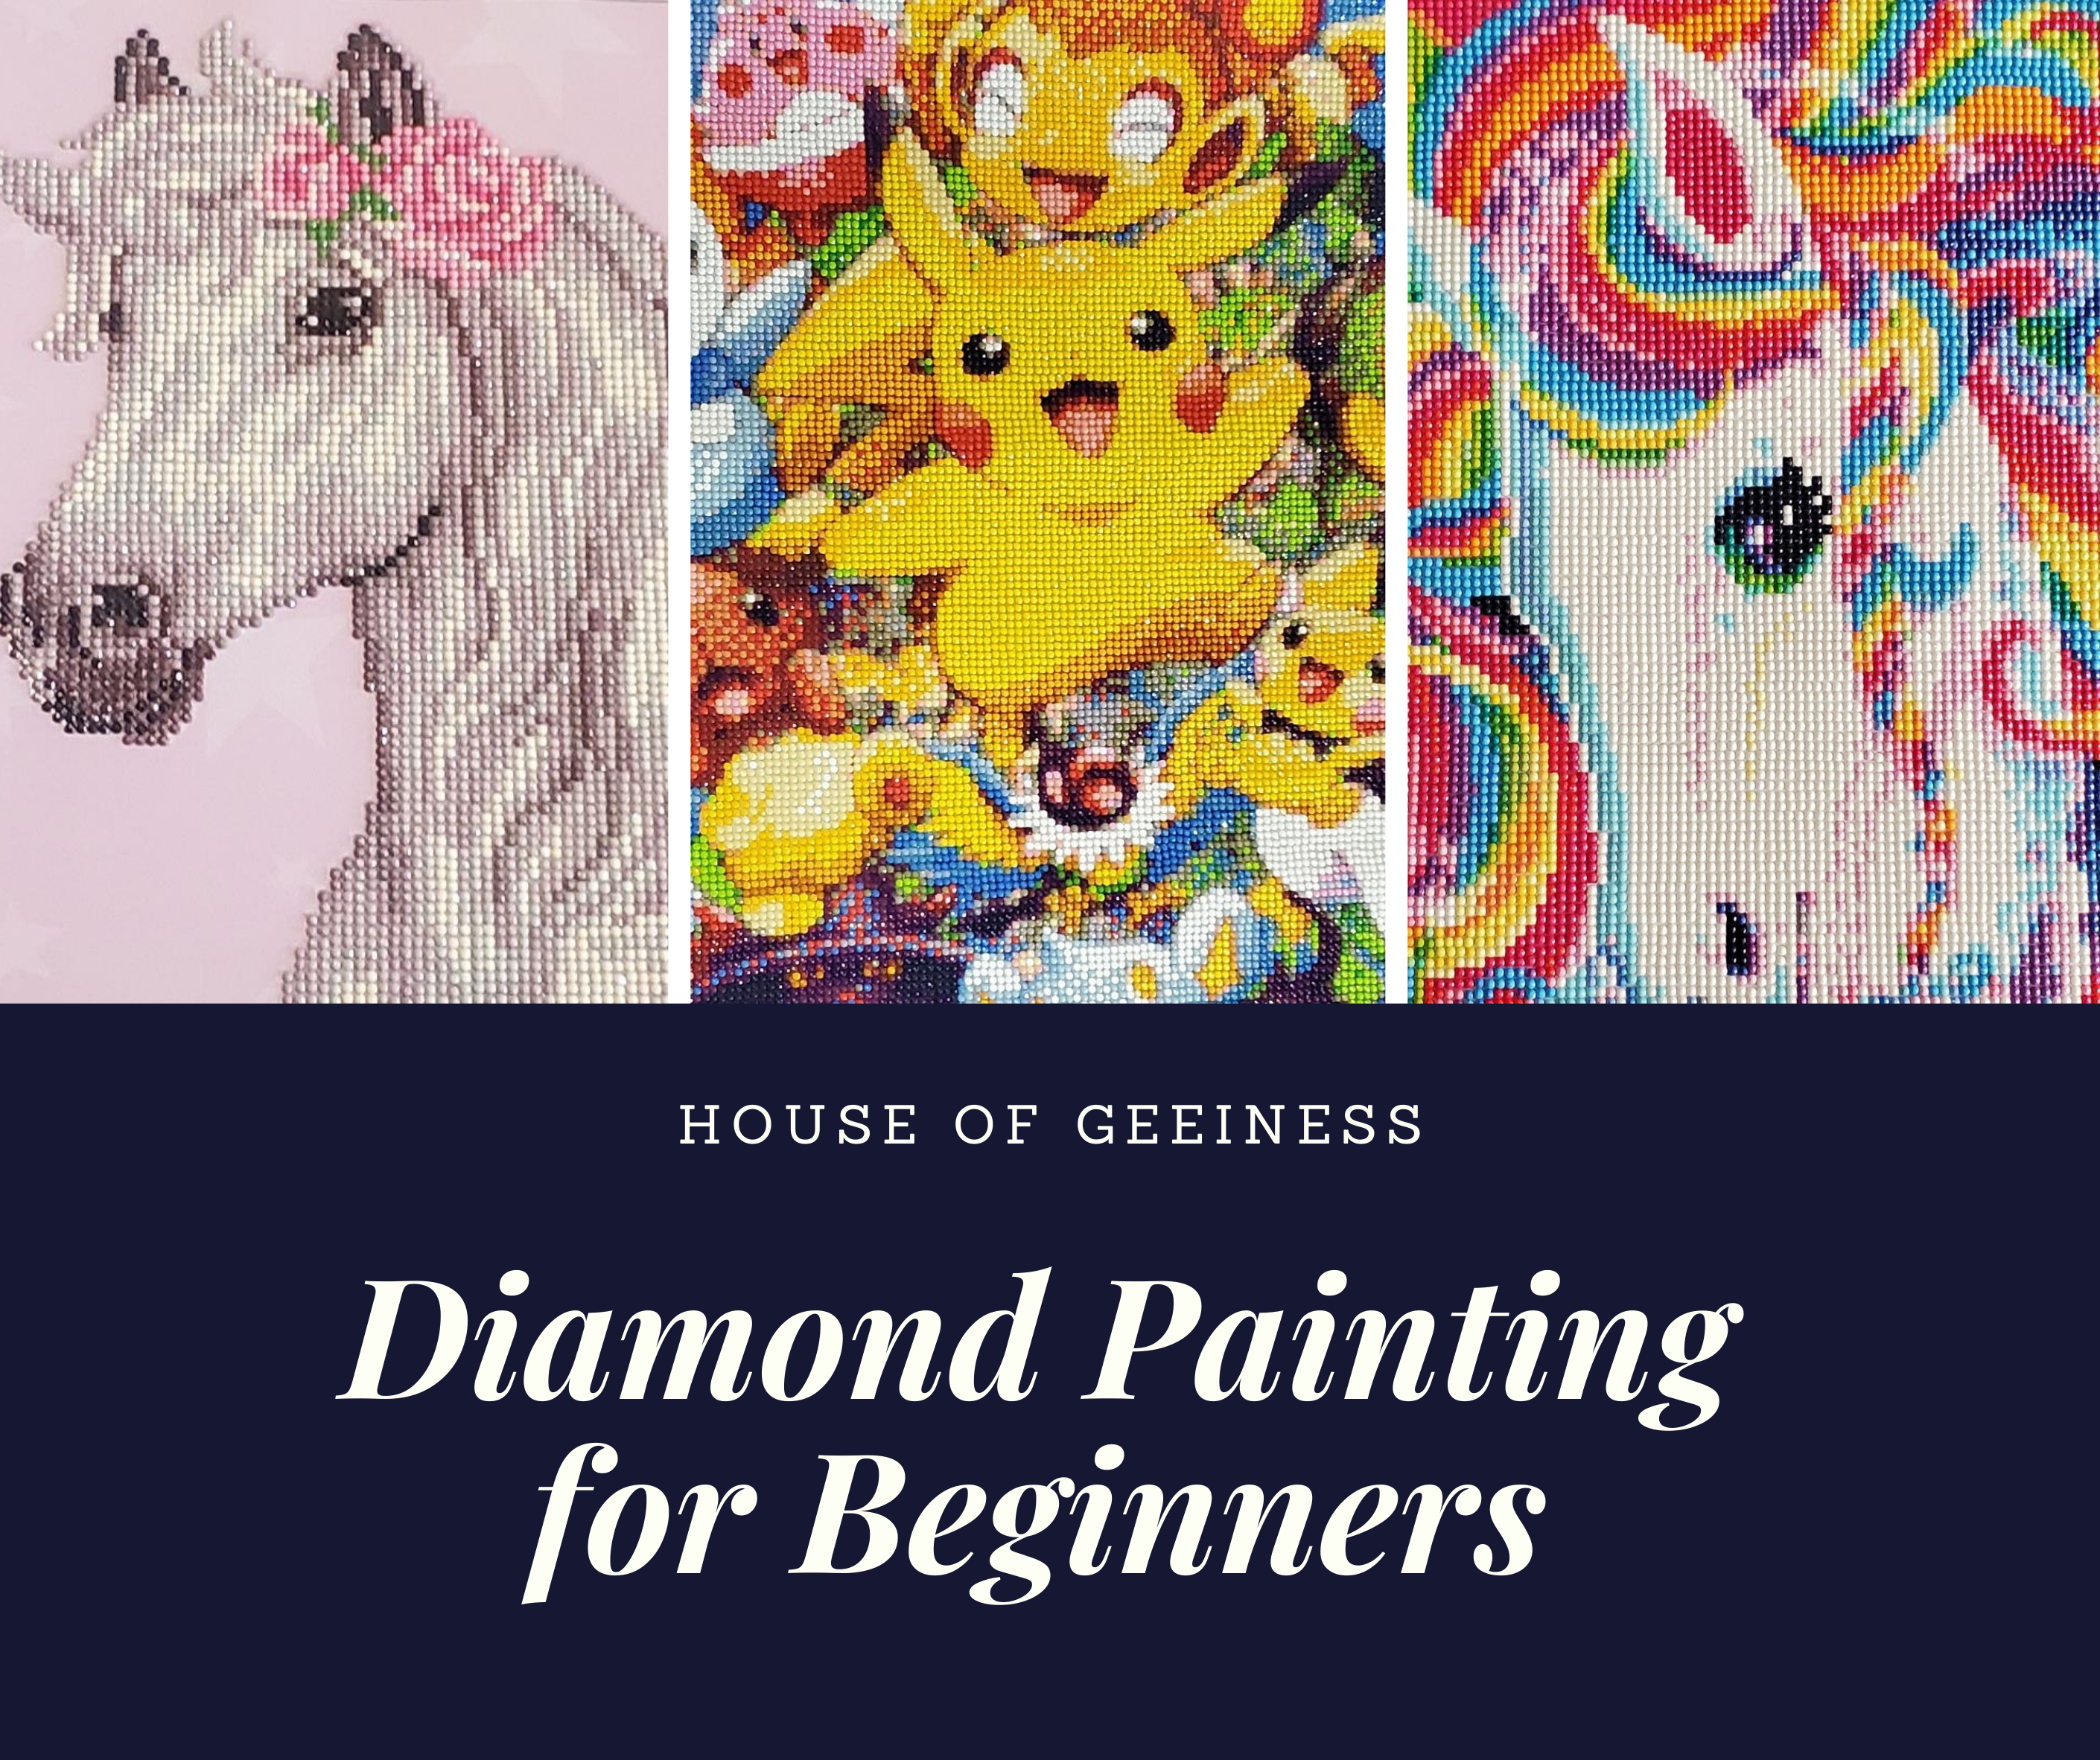 Diamond Painting for Beginners - House of Geekiness